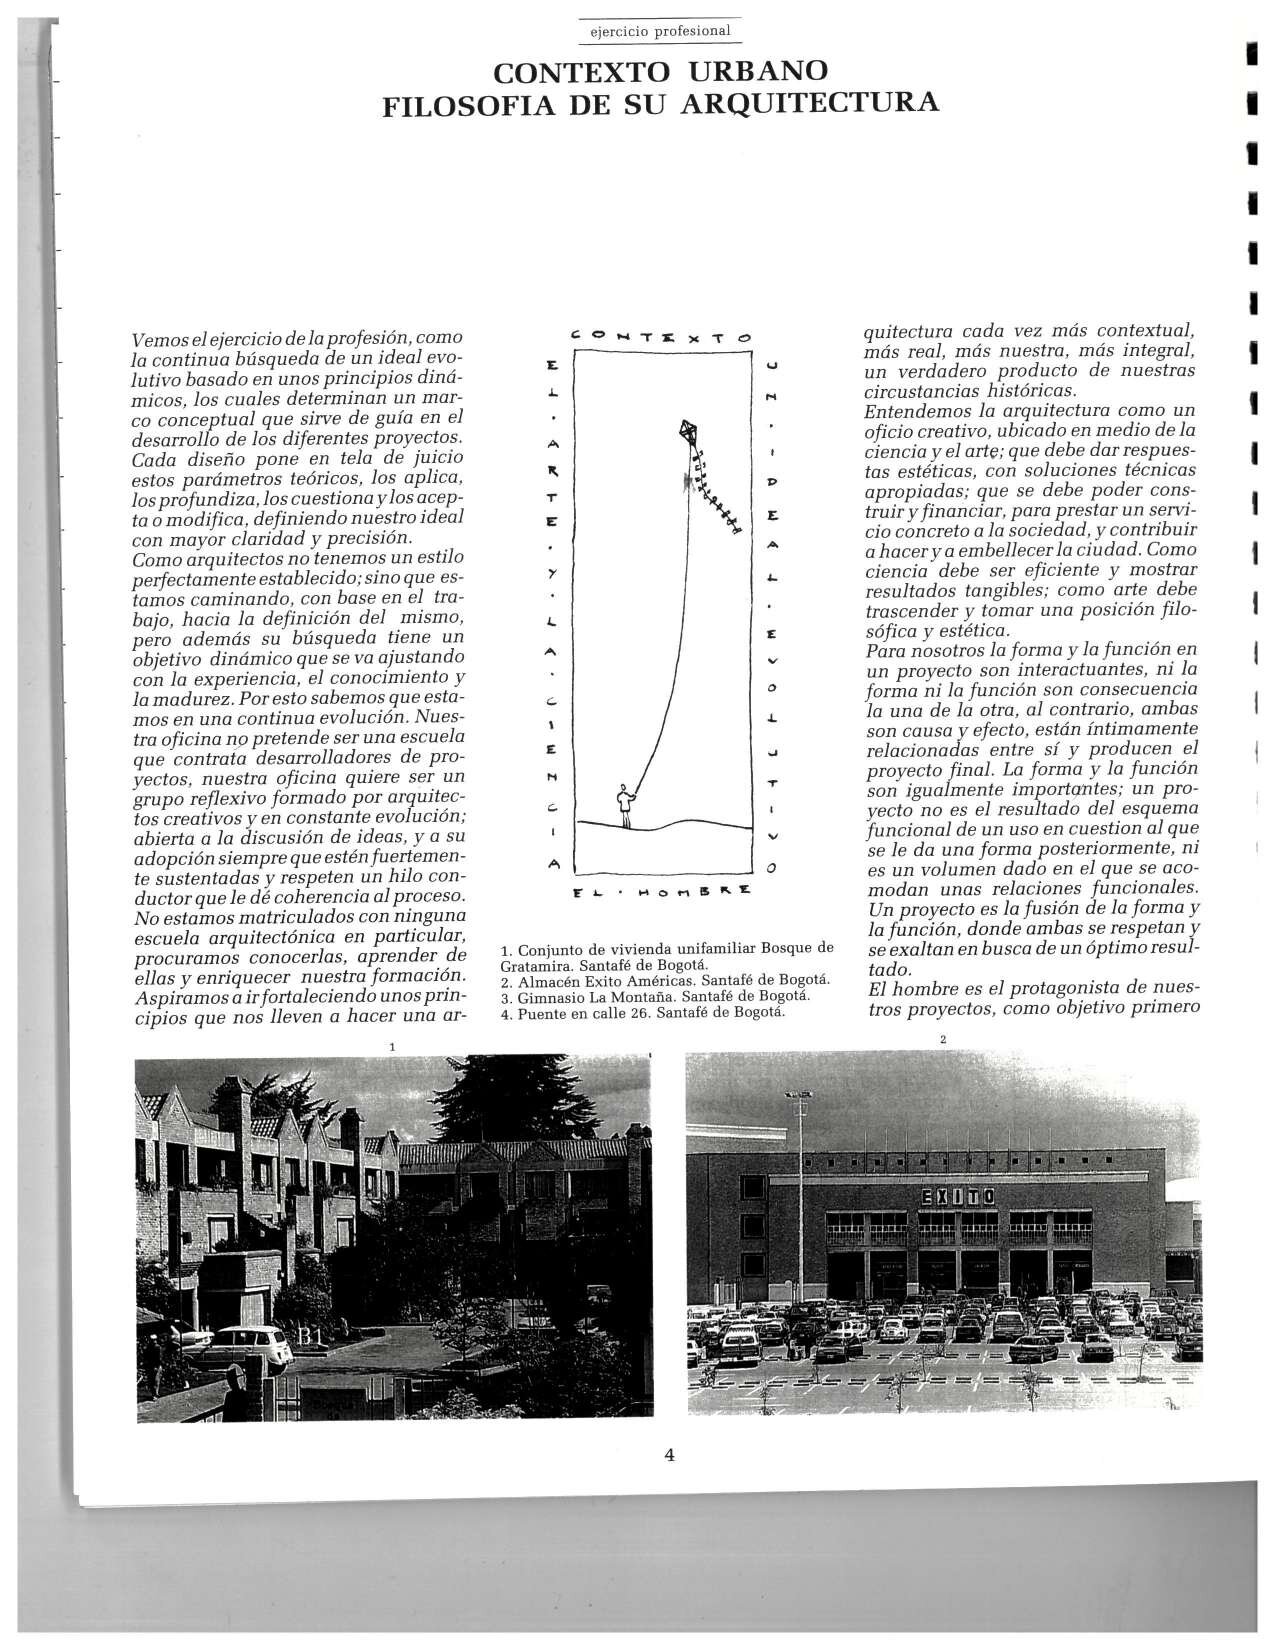 1995_Obra Contexto Urbano_Revista PROA_compressed_page-0004.jpg